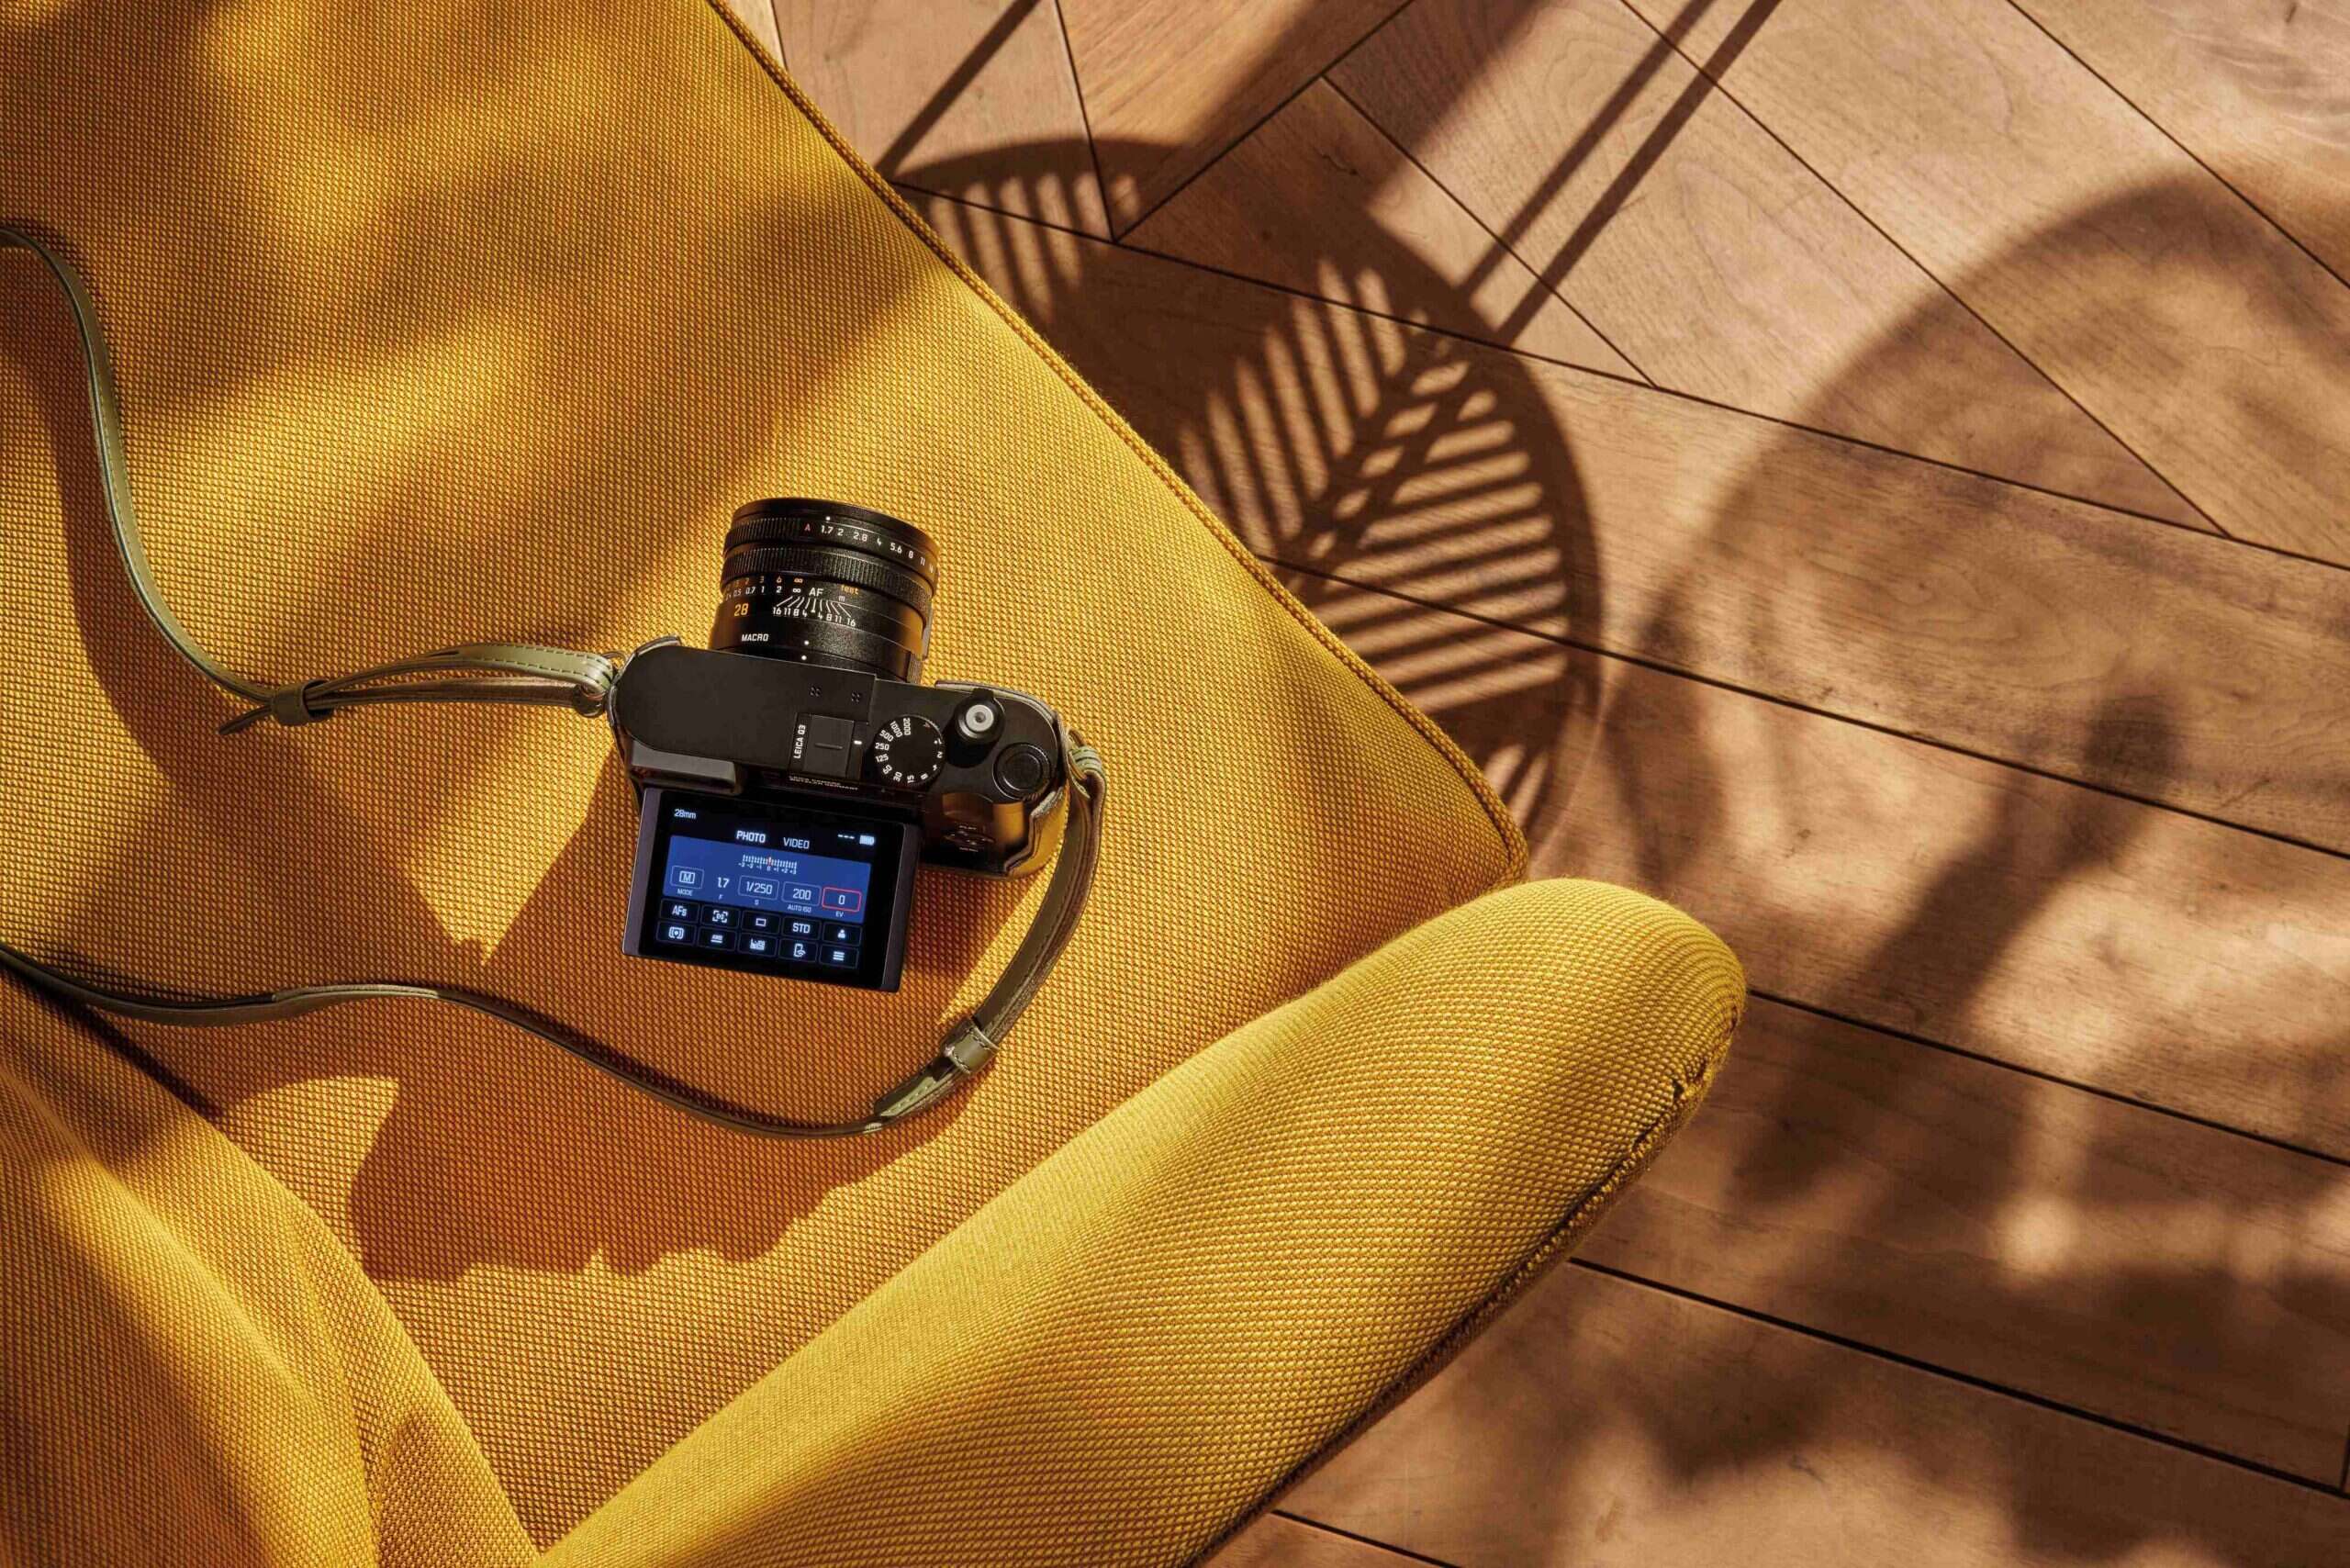 Leica Q3 Introduced with 60MP BSI Sensor, Tilting Screen, Wireless